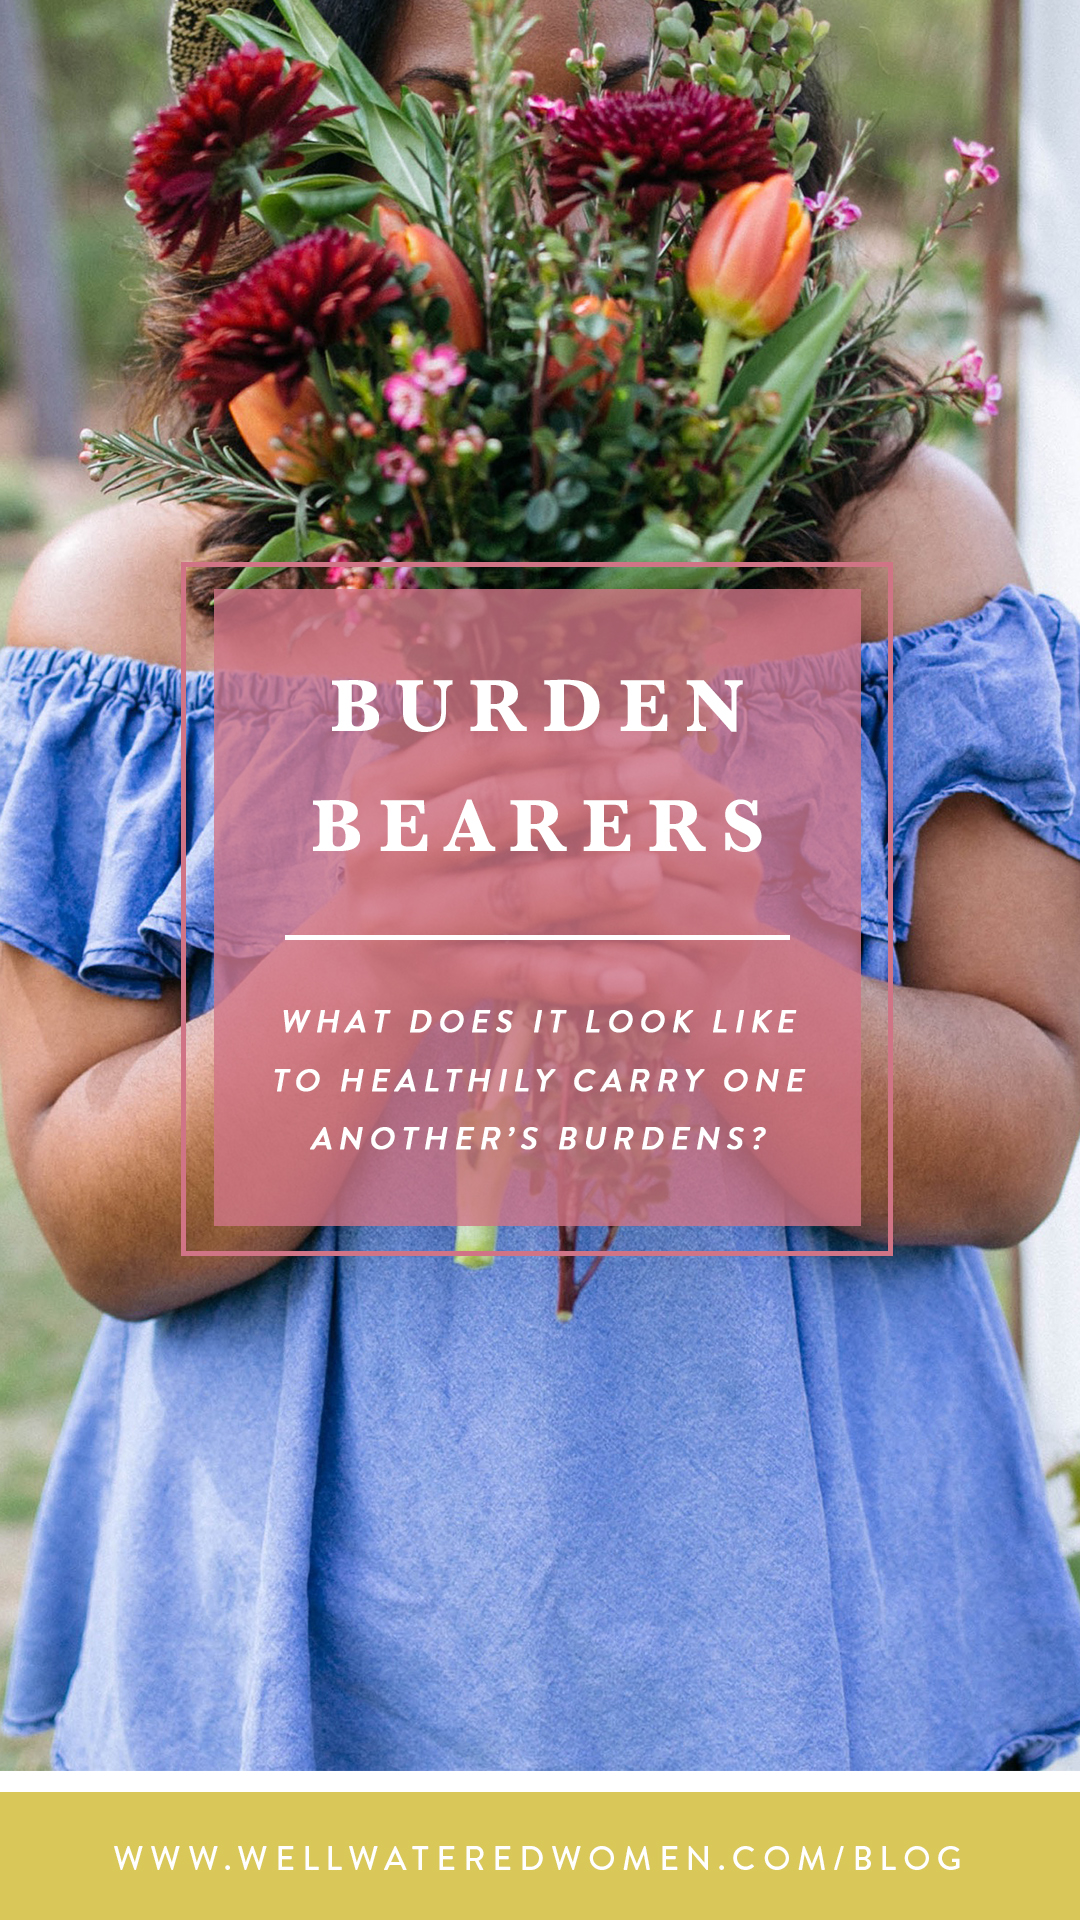 Burden Bearers - How to carry each other's burden's as Christian women